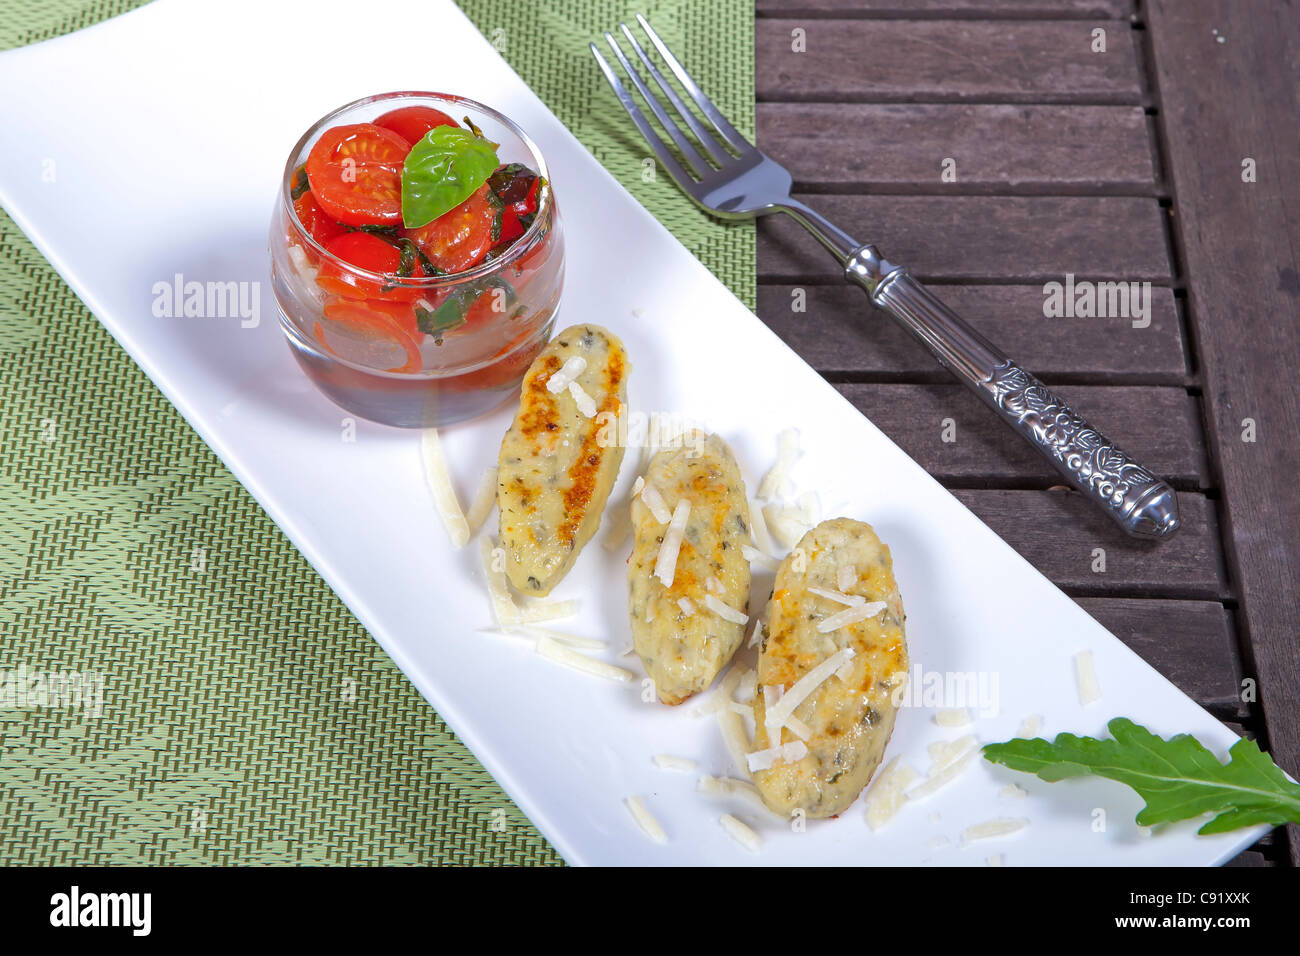 Quark dumplings with roasted tomatoes, arugula as a garnish Stock Photo